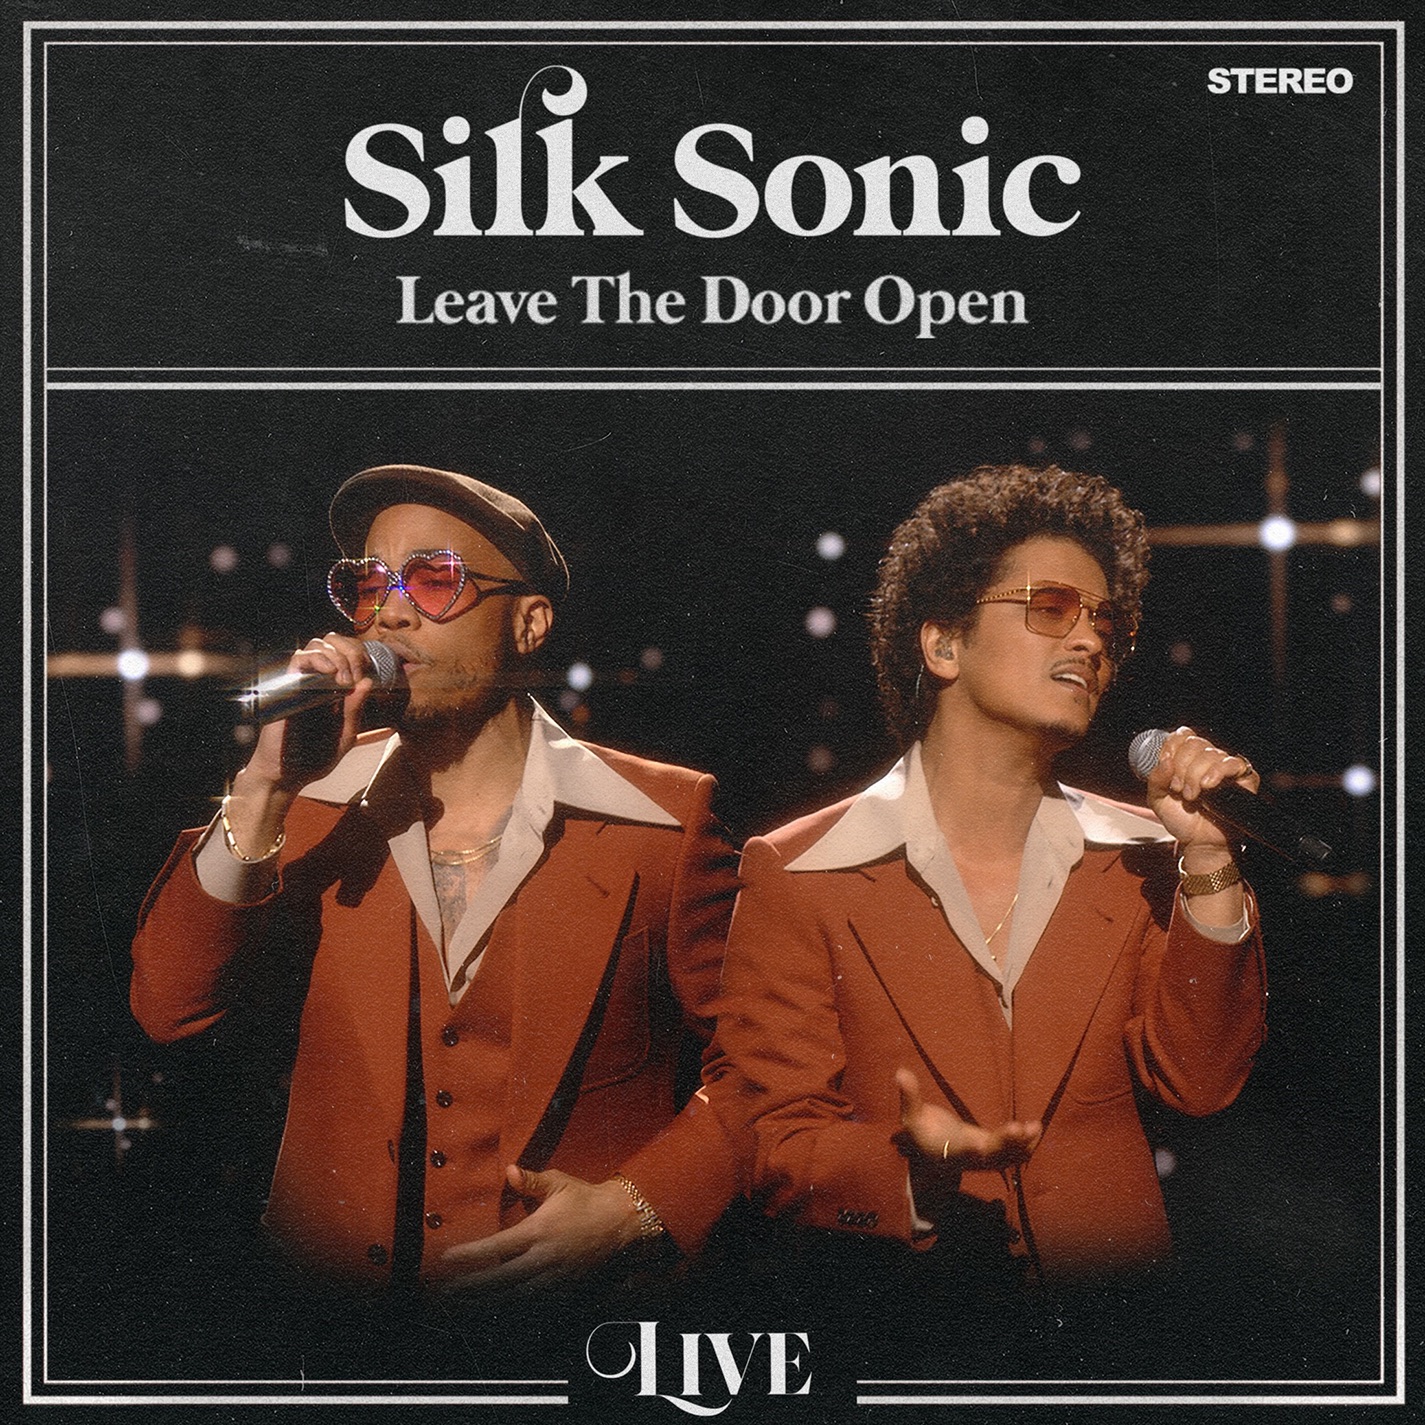 Bruno Mars, Anderson .Paak & Silk Sonic - Leave The Door Open (Live) - Single